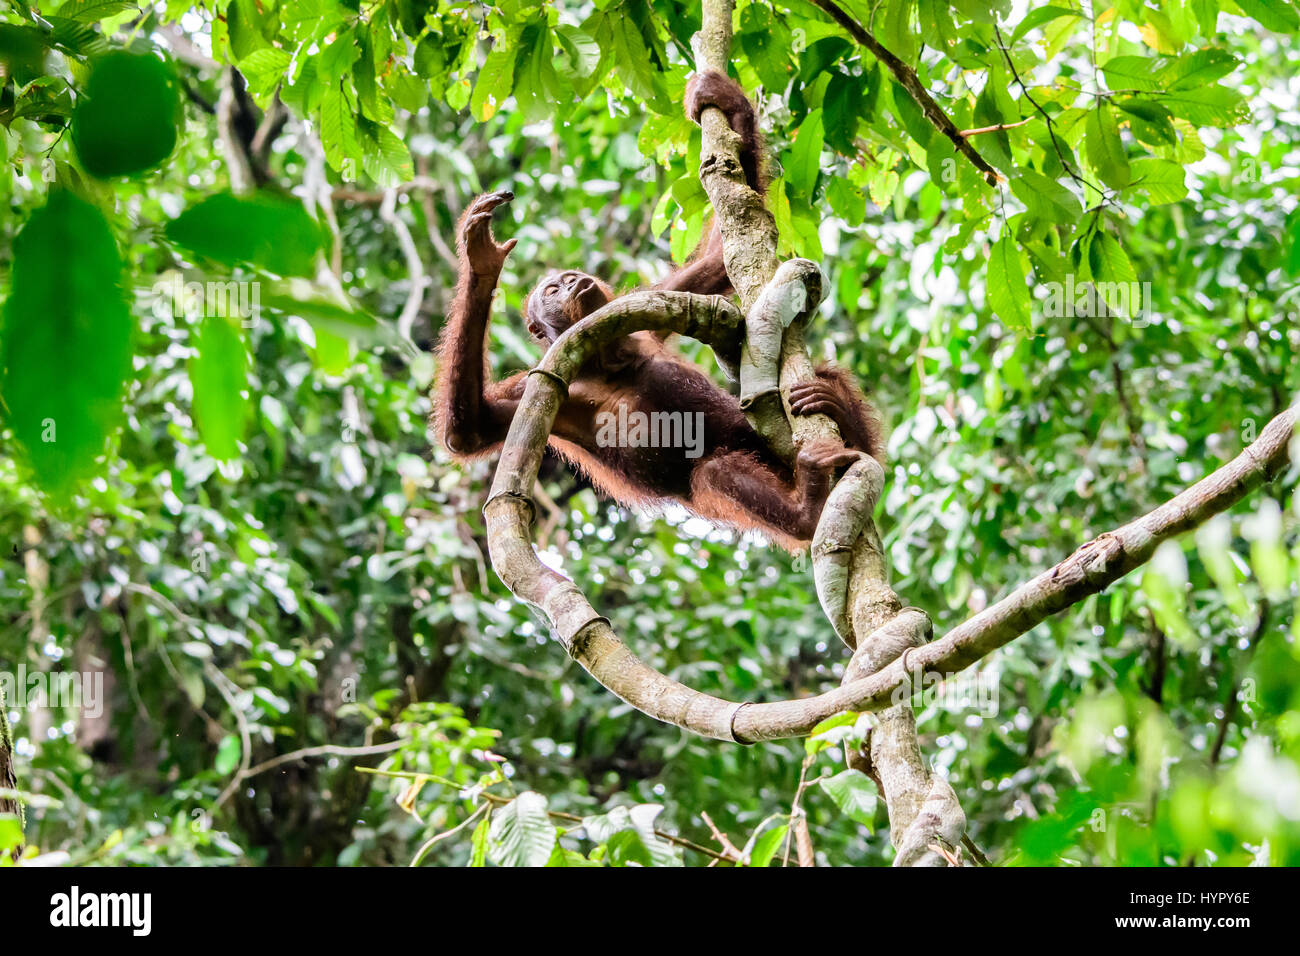 Happy orangutan climbing trees in the forest Stock Photo